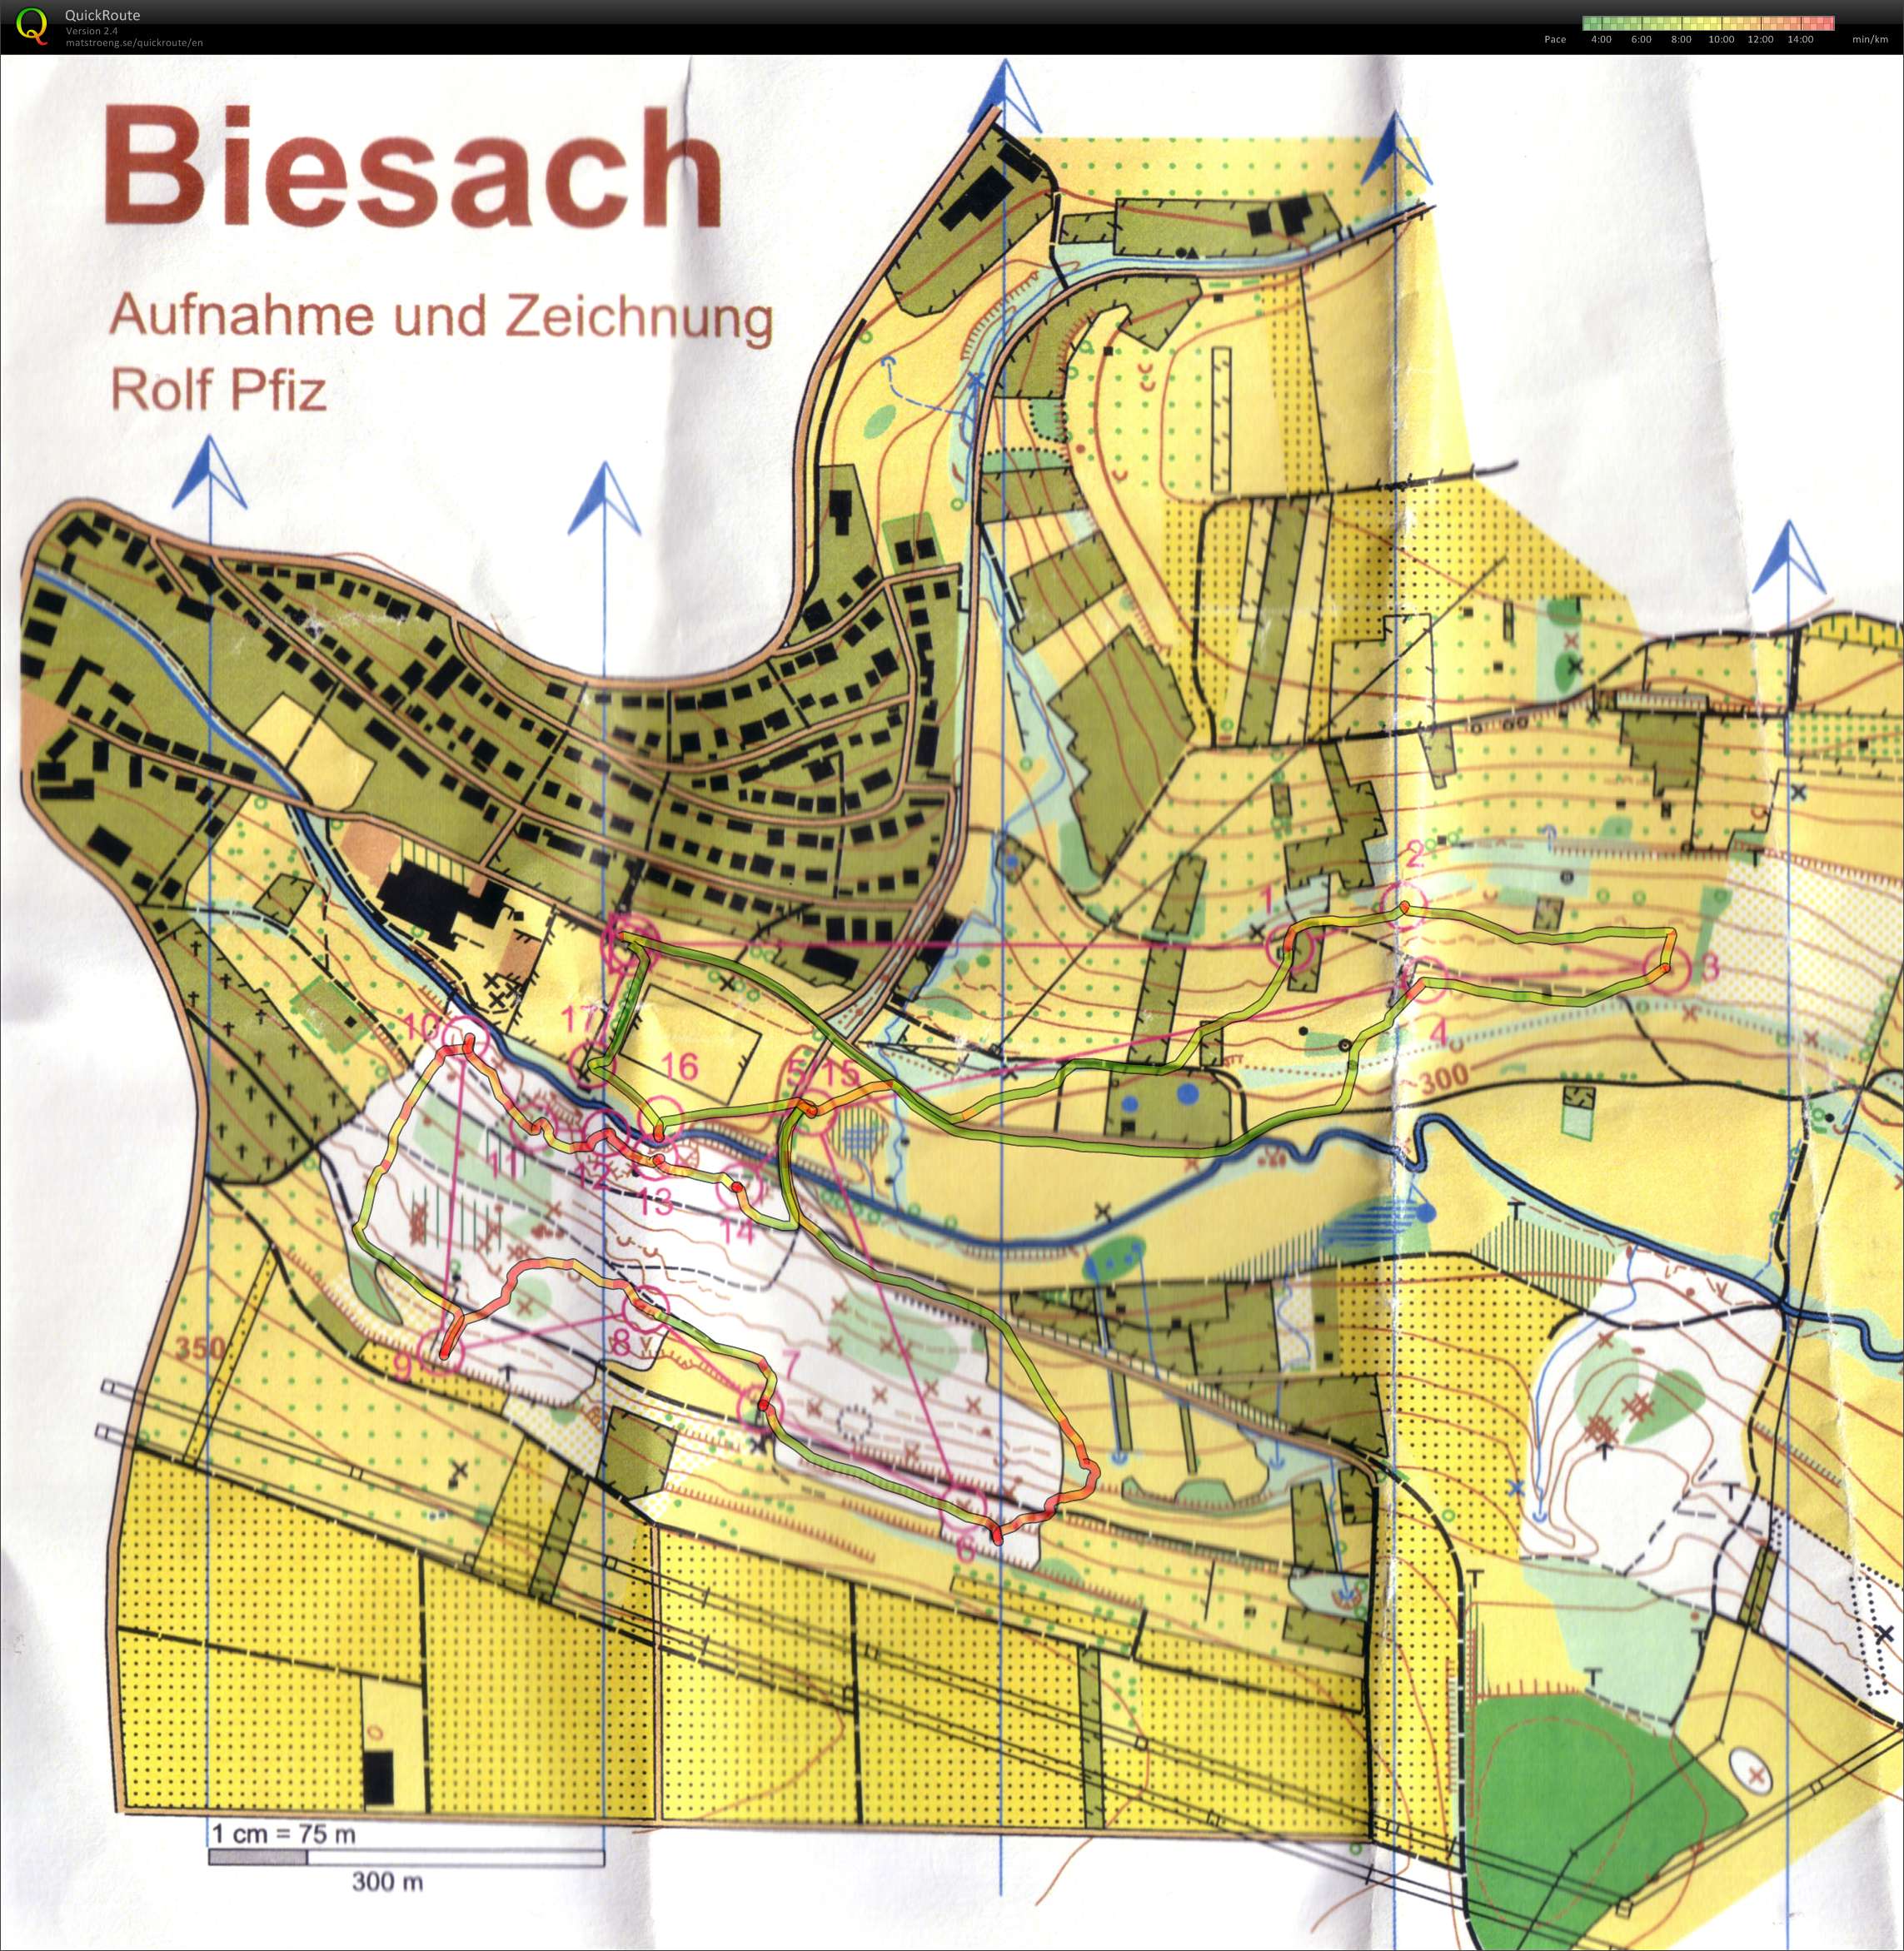 Training Biesach (07-09-2011)